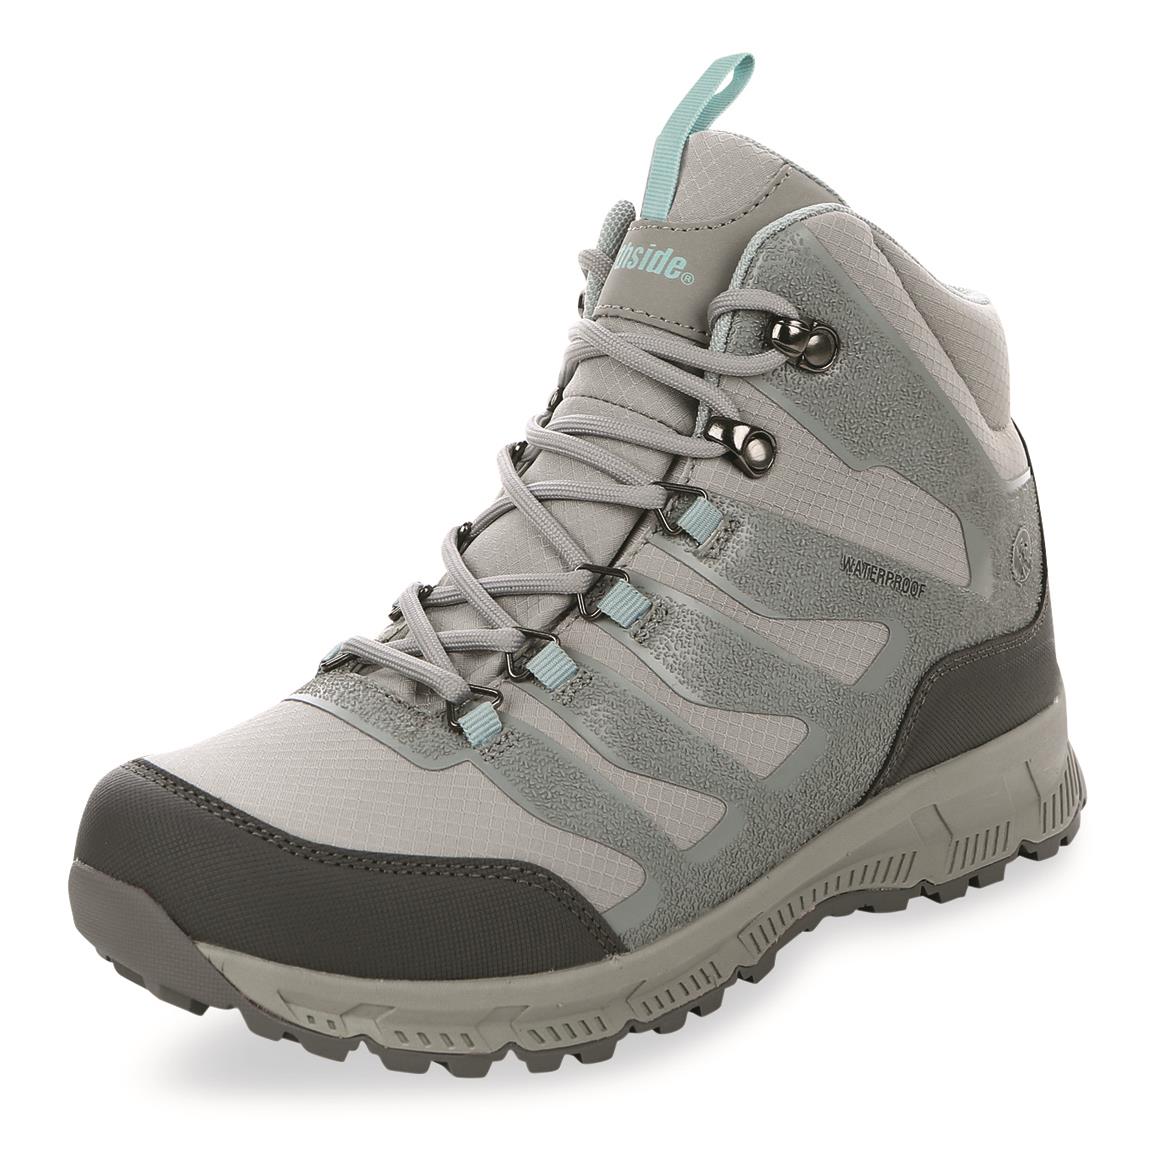 Northside Women's Hargrove Mid Waterproof Hiking Boots, Gray/Aqua